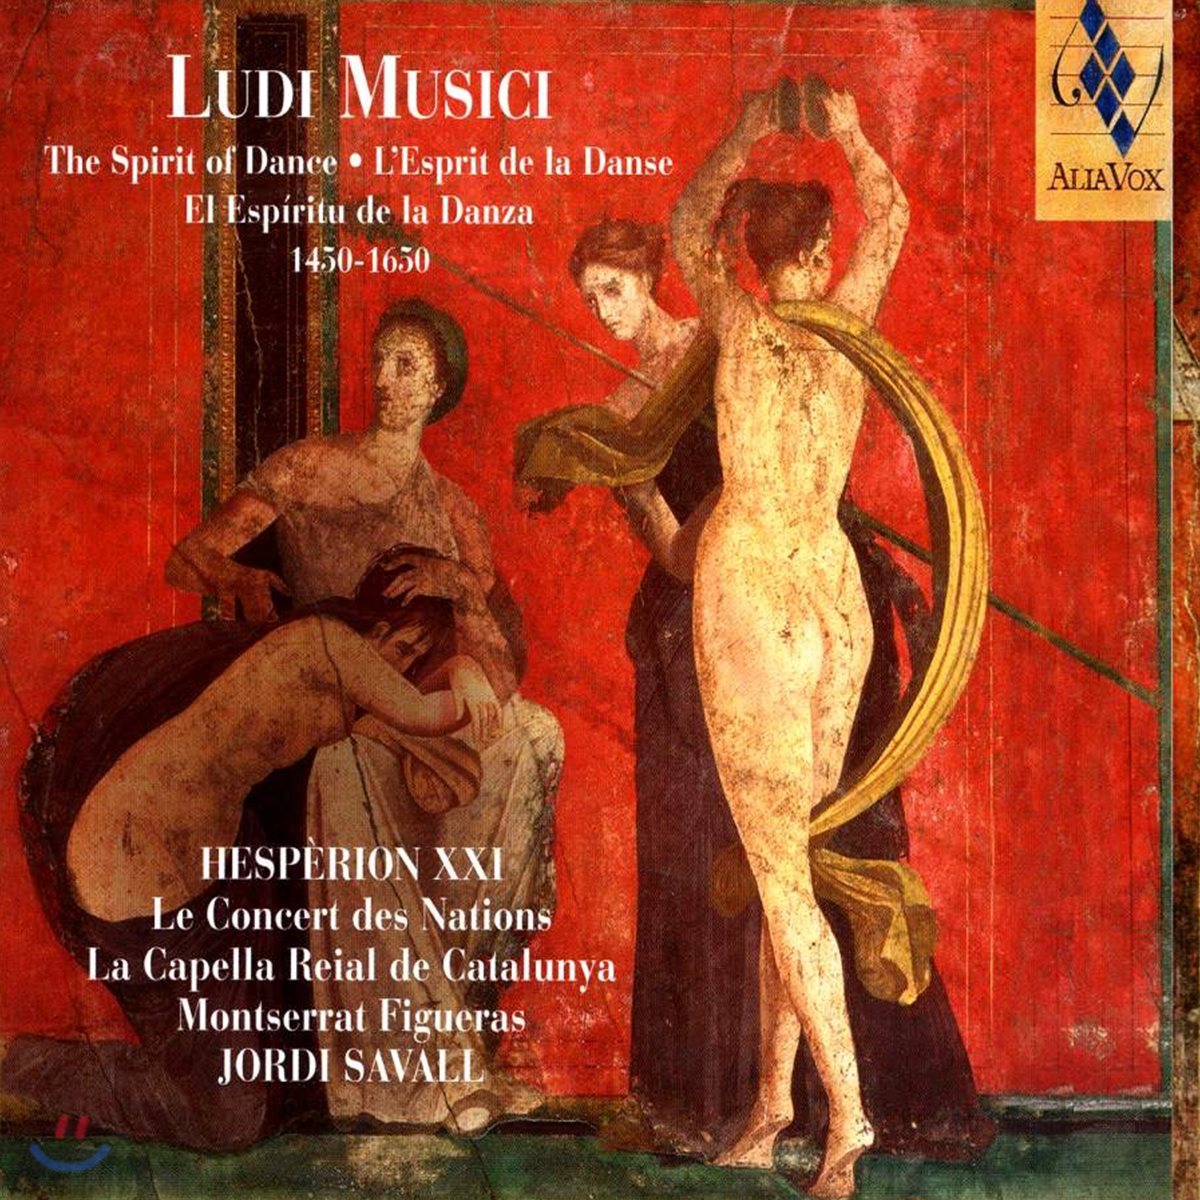 Montserrat Figueras 루디 뮤직 - 영혼의 무곡 1450-1650 (Ludi Musici - The Spirit of Dance)